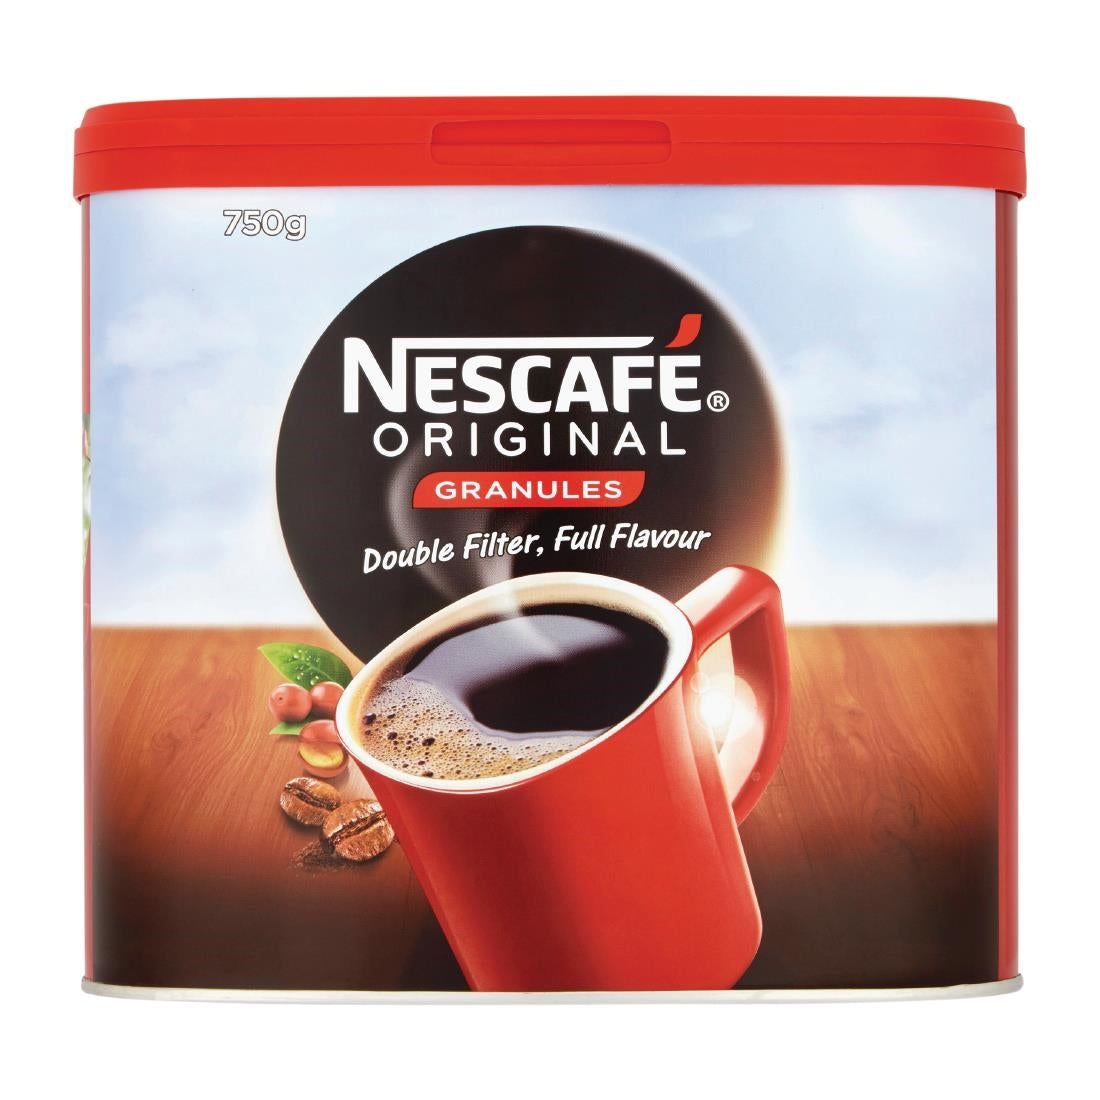 GC598 Nescafe Original Coffee JD Catering Equipment Solutions Ltd